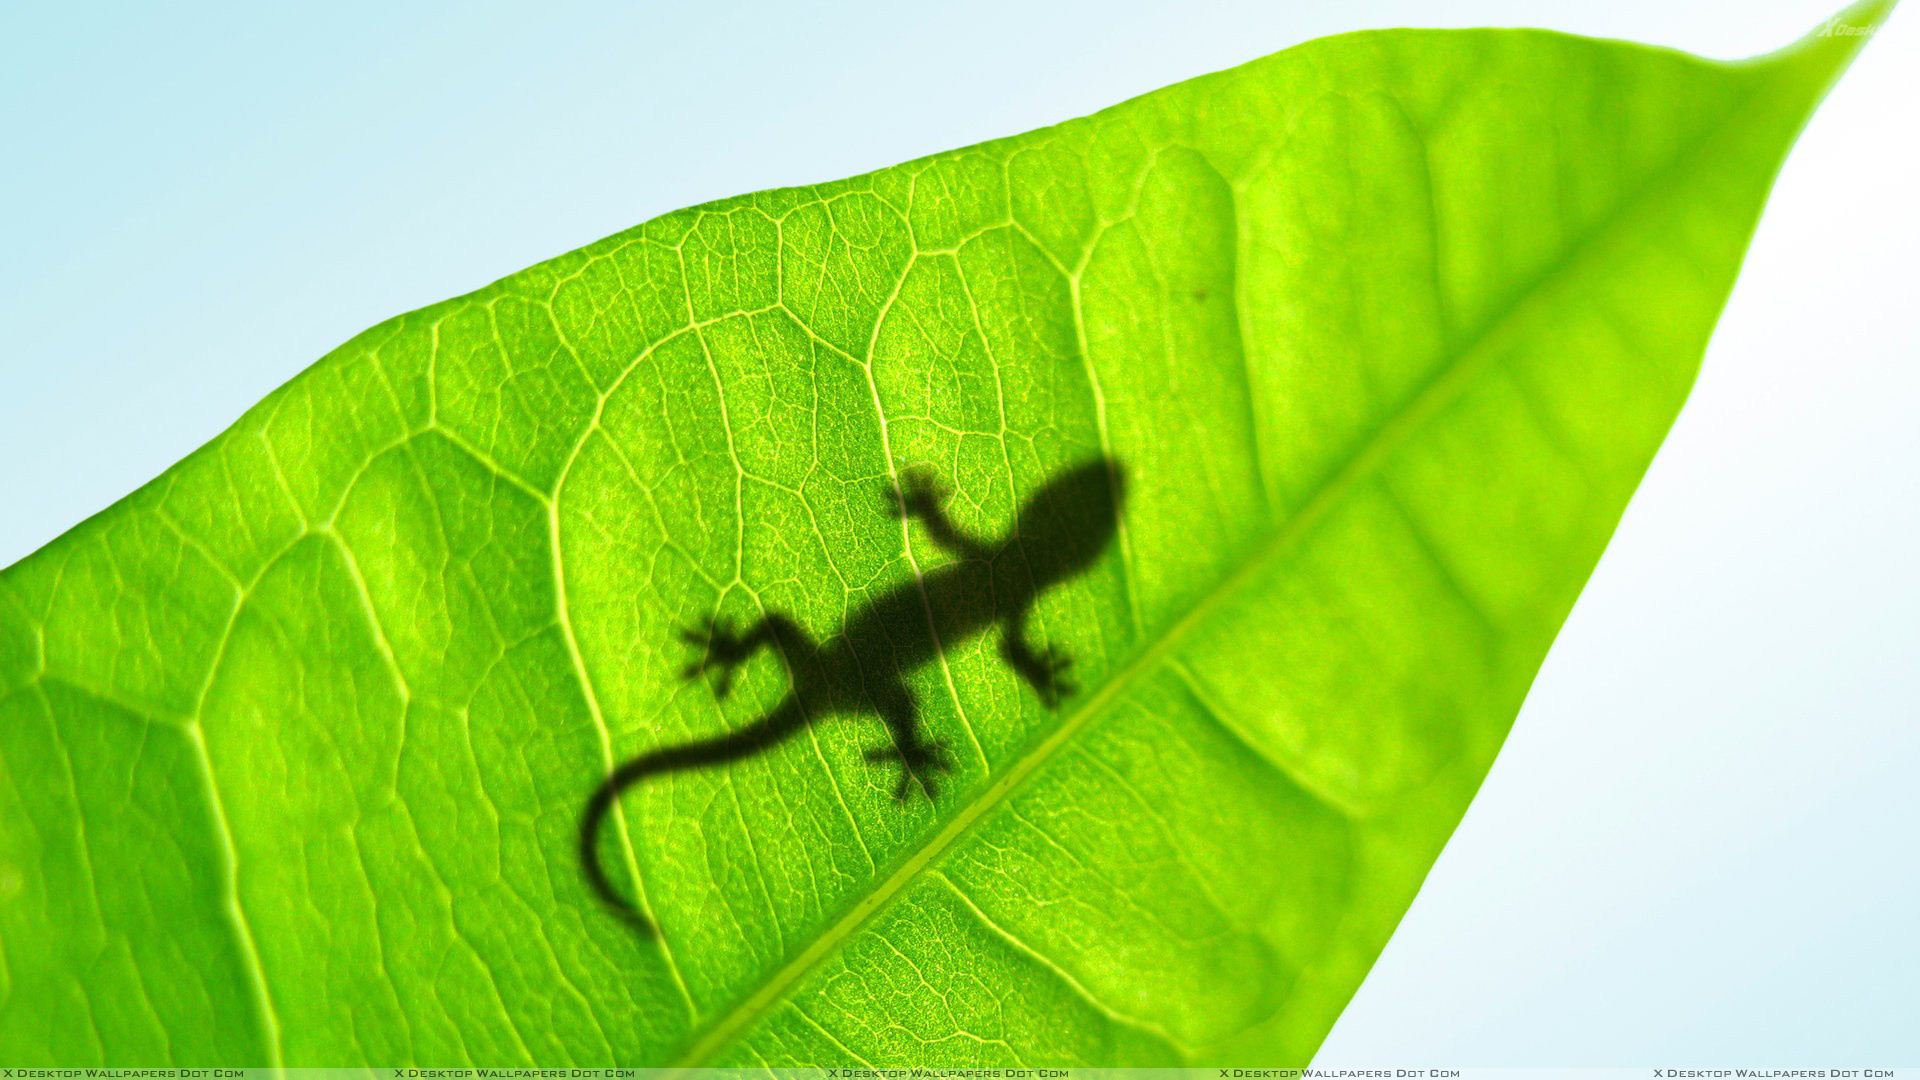 Lizard On A Green Leave Closeup